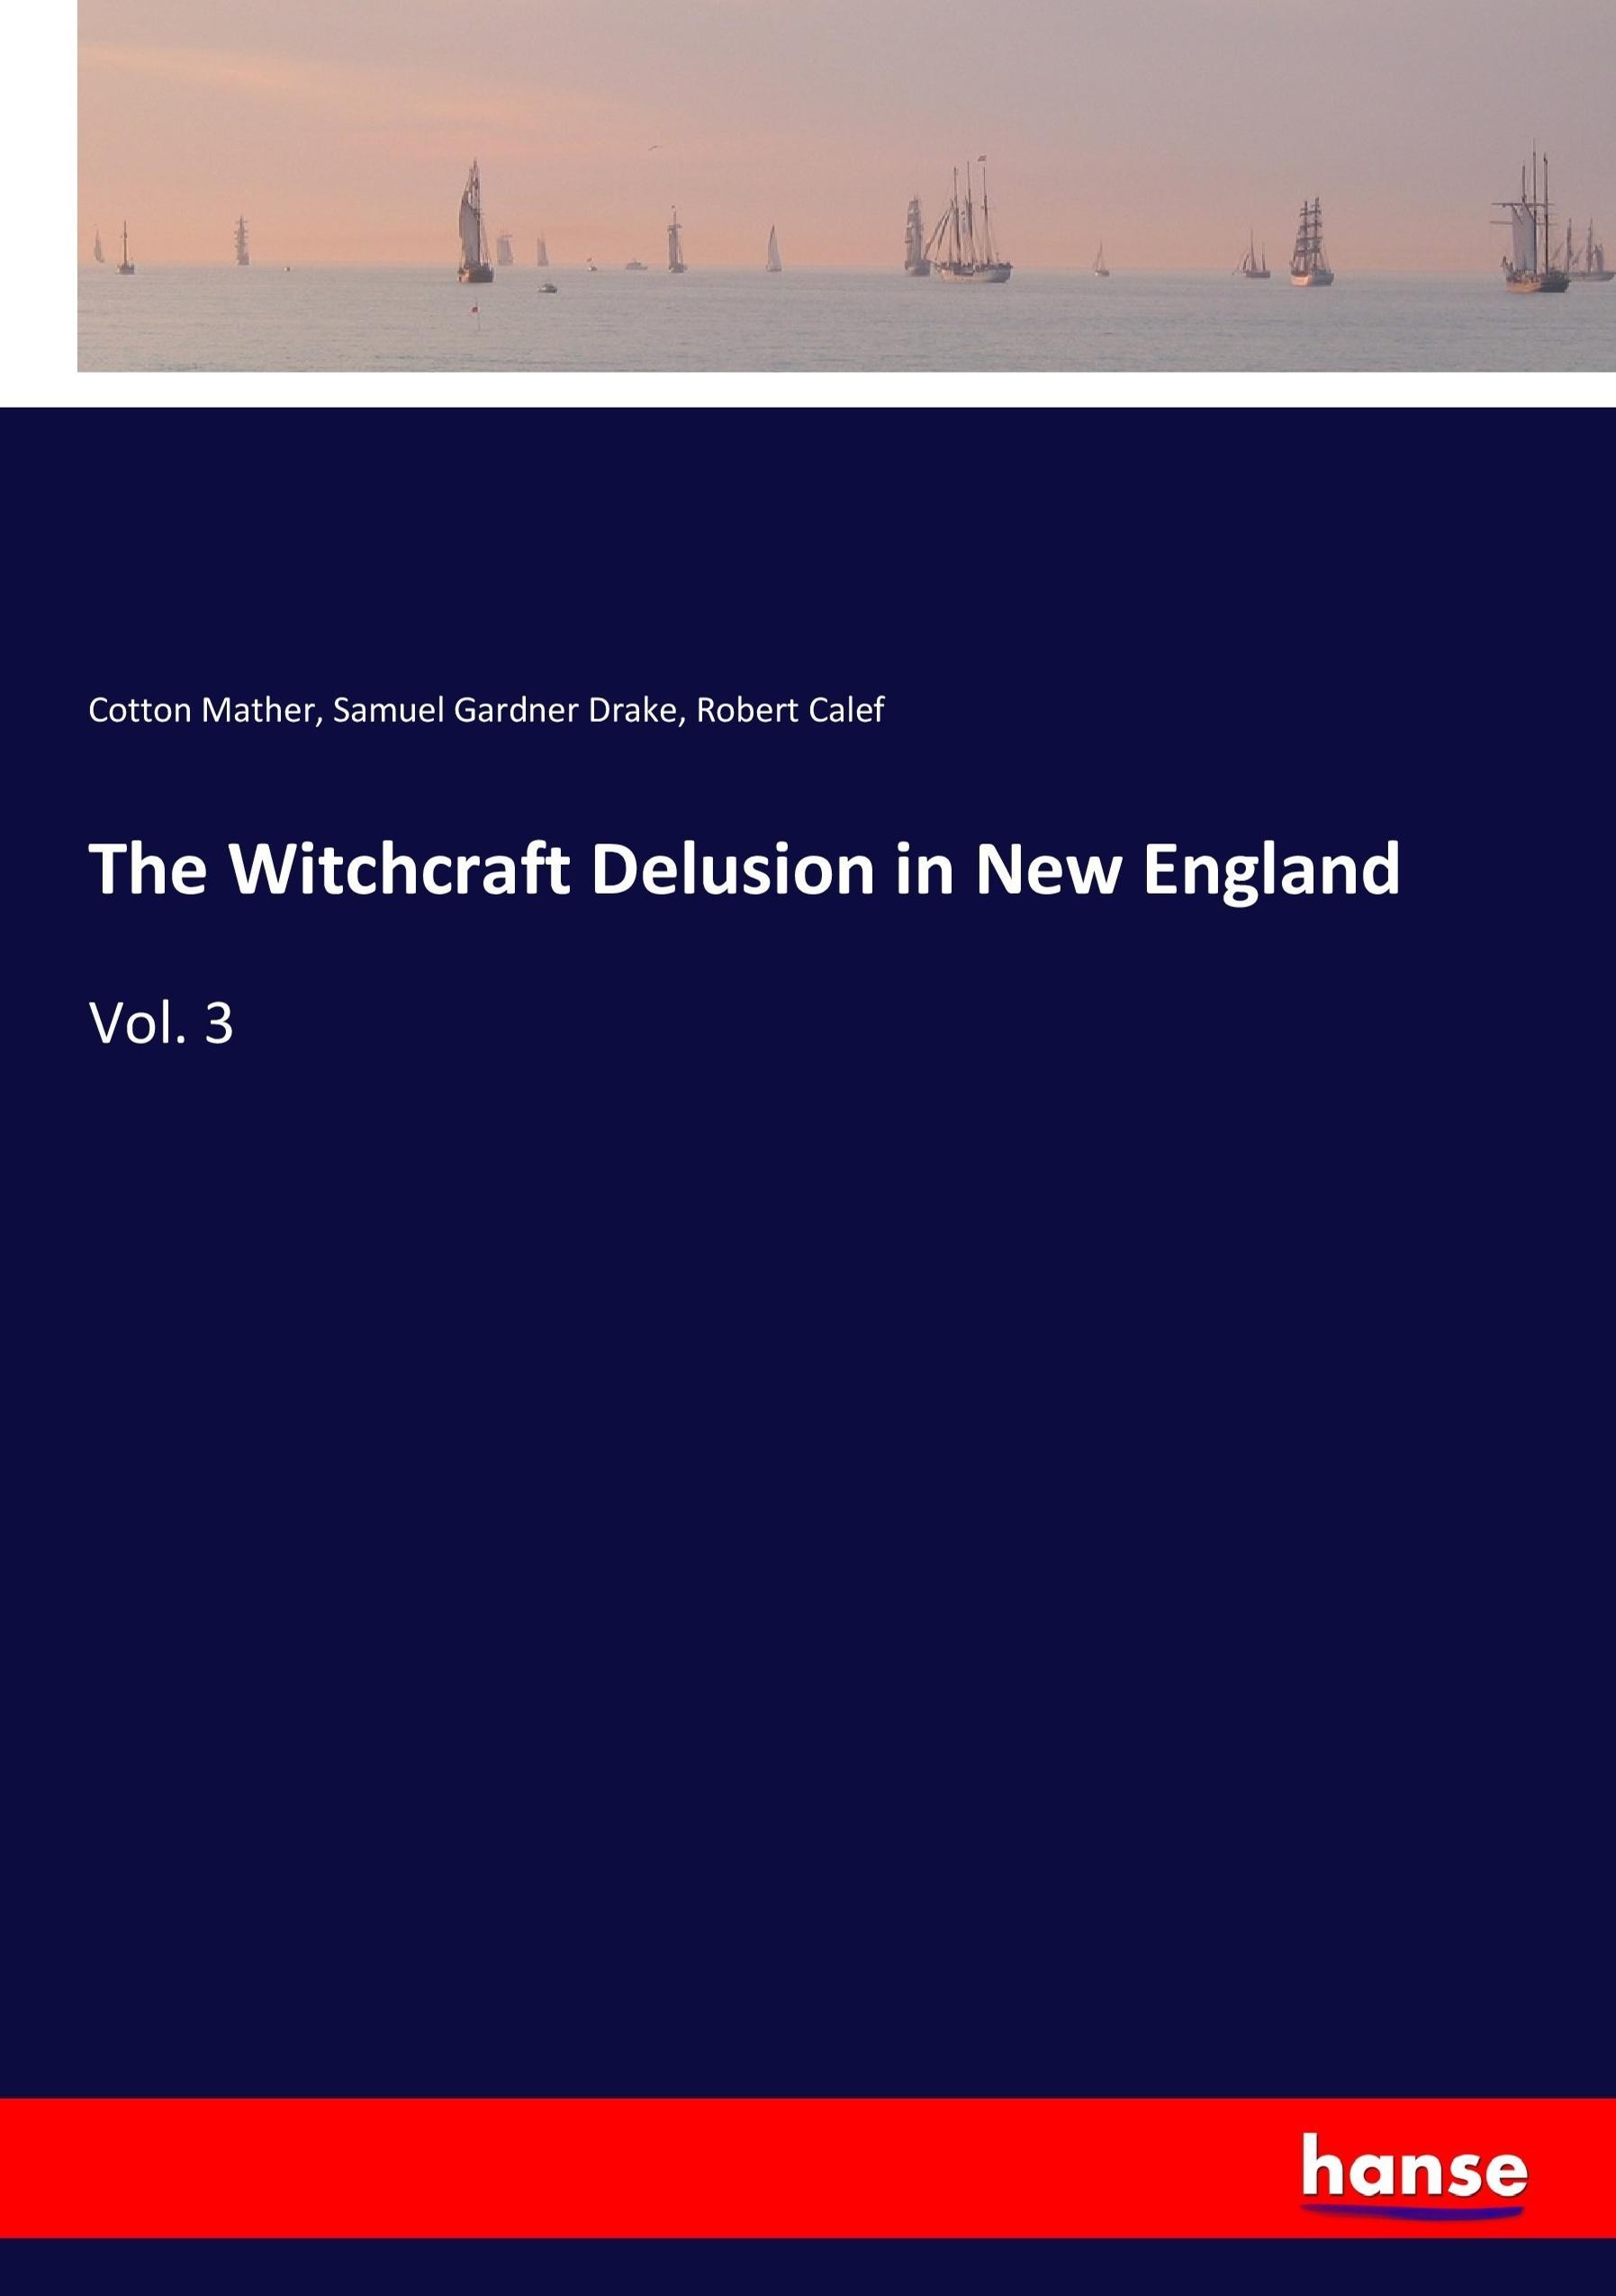 The Witchcraft Delusion in New England / Vol. 3 / Cotton Mather (u. a.) / Taschenbuch / Paperback / 248 S. / Englisch / 2017 / hansebooks / EAN 9783337374884 - Mather, Cotton